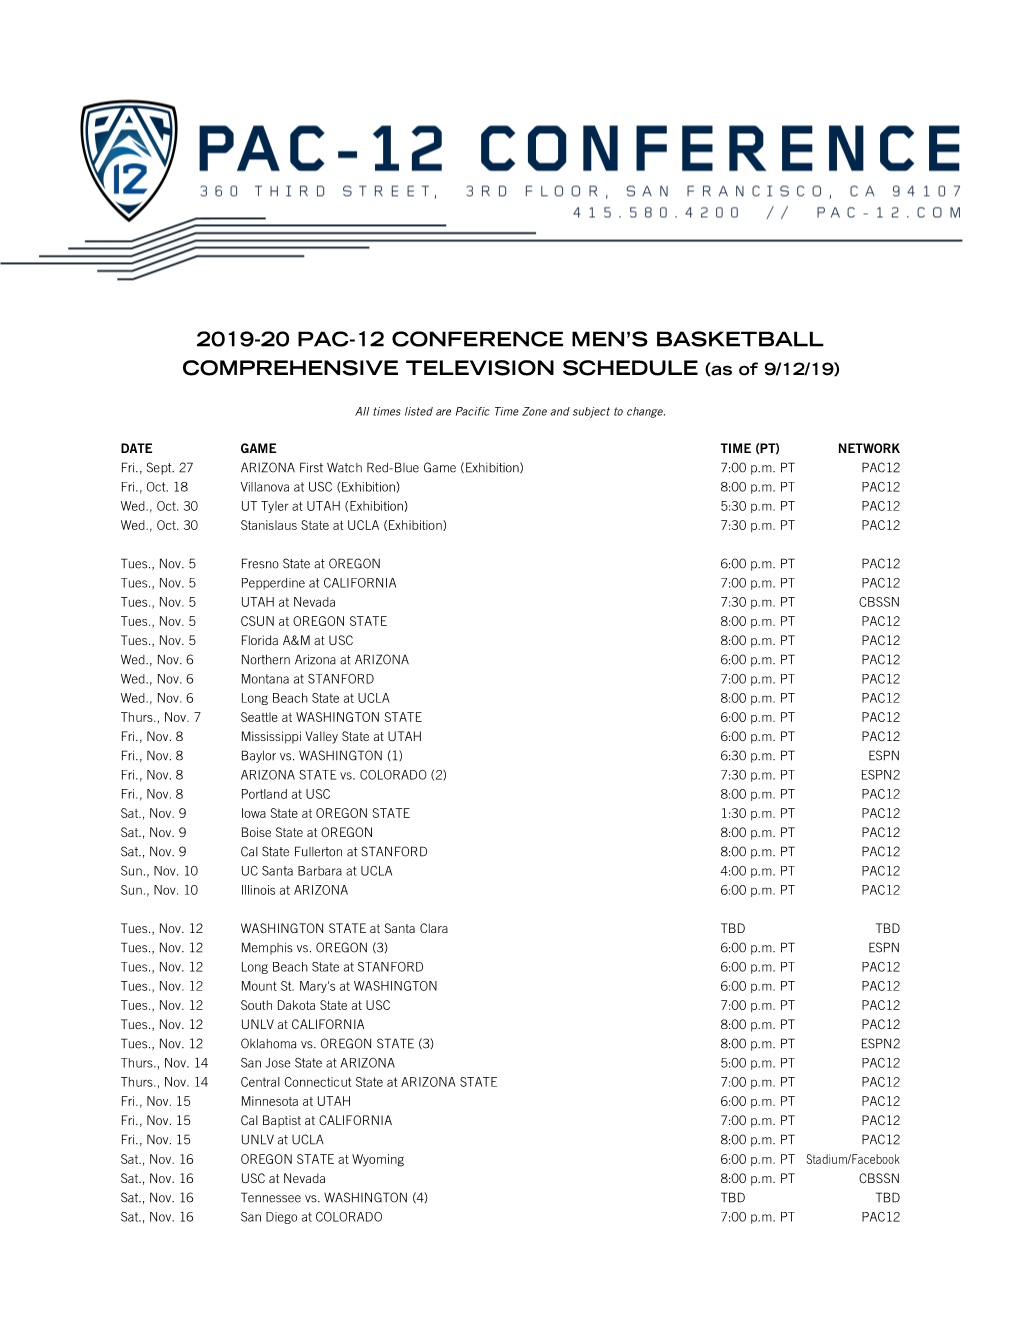 2019-20 Pac-12 Men's Basketball TV Schedule